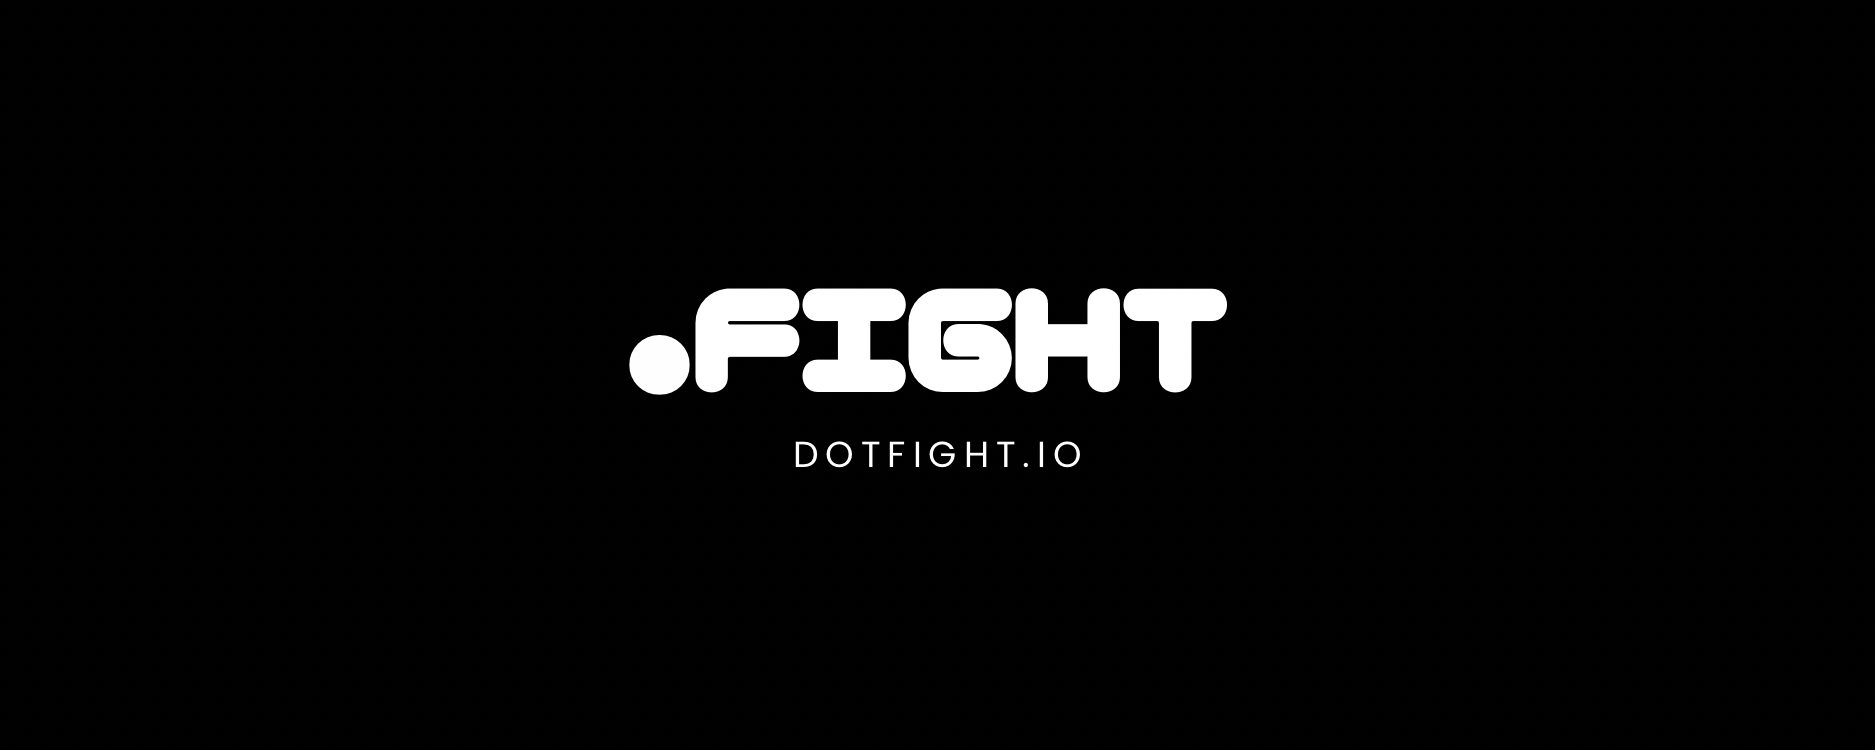 DotFight